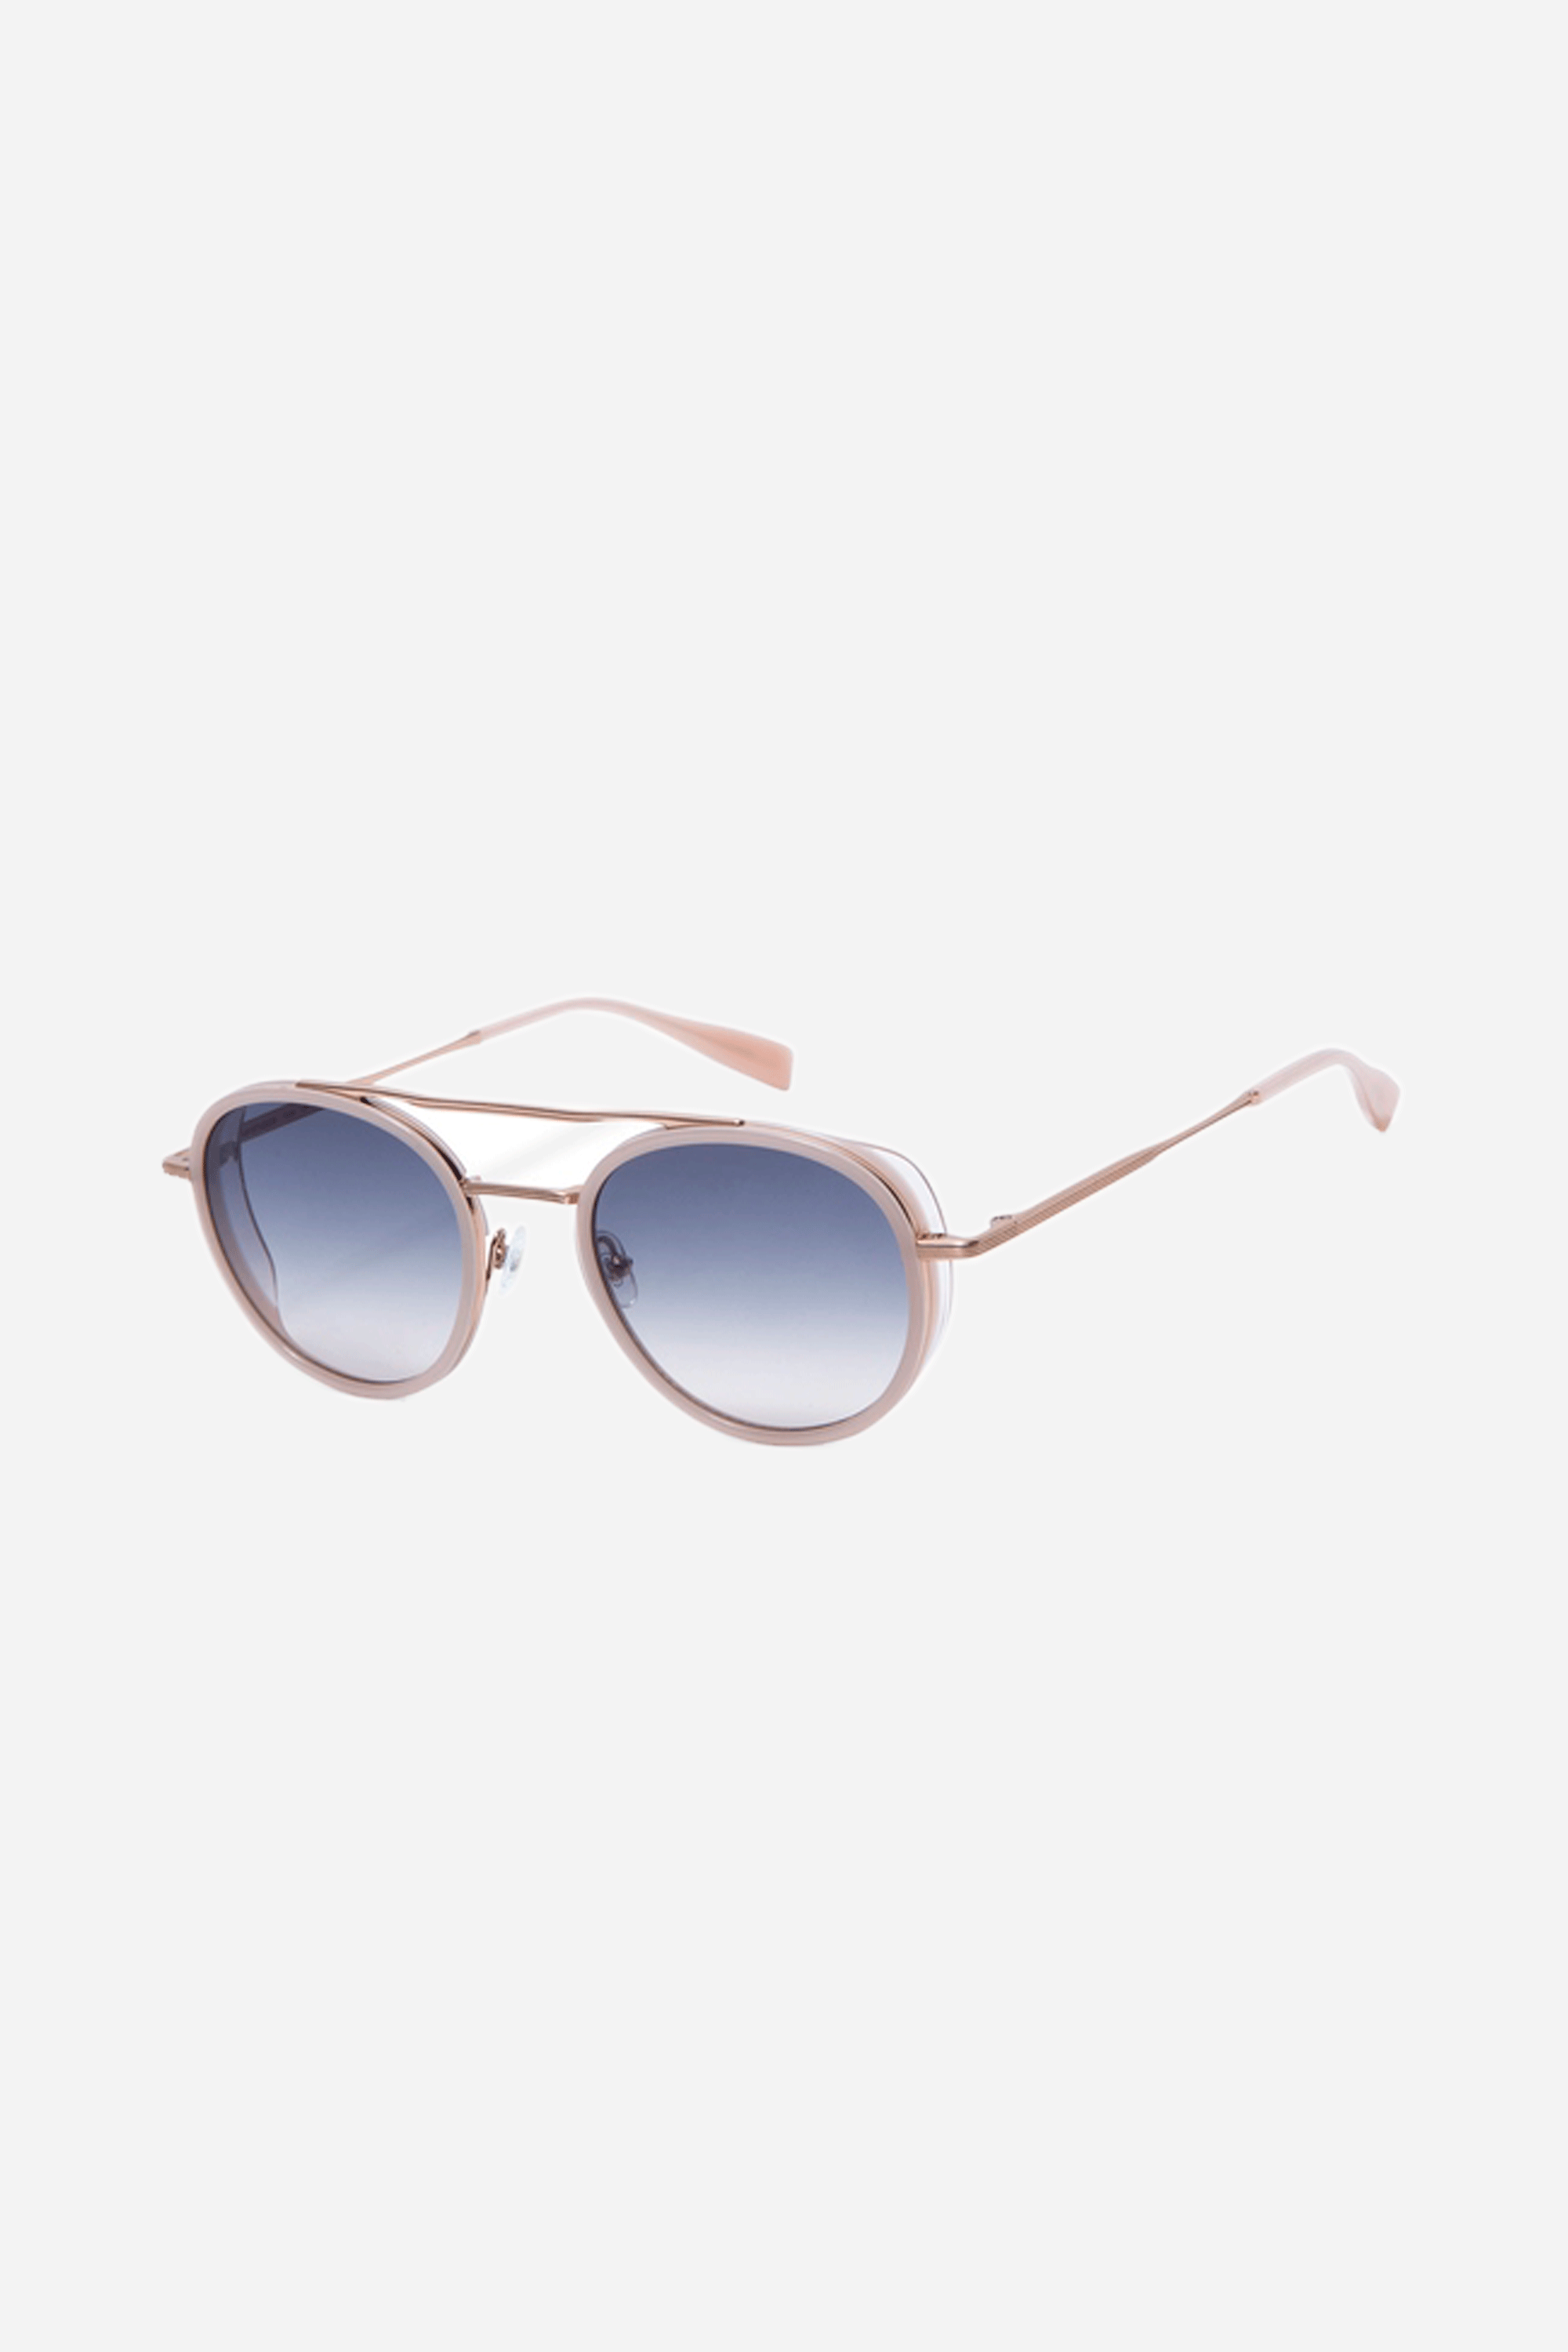 Gigi Studios round combined peach sunglasses - Eyewear Club